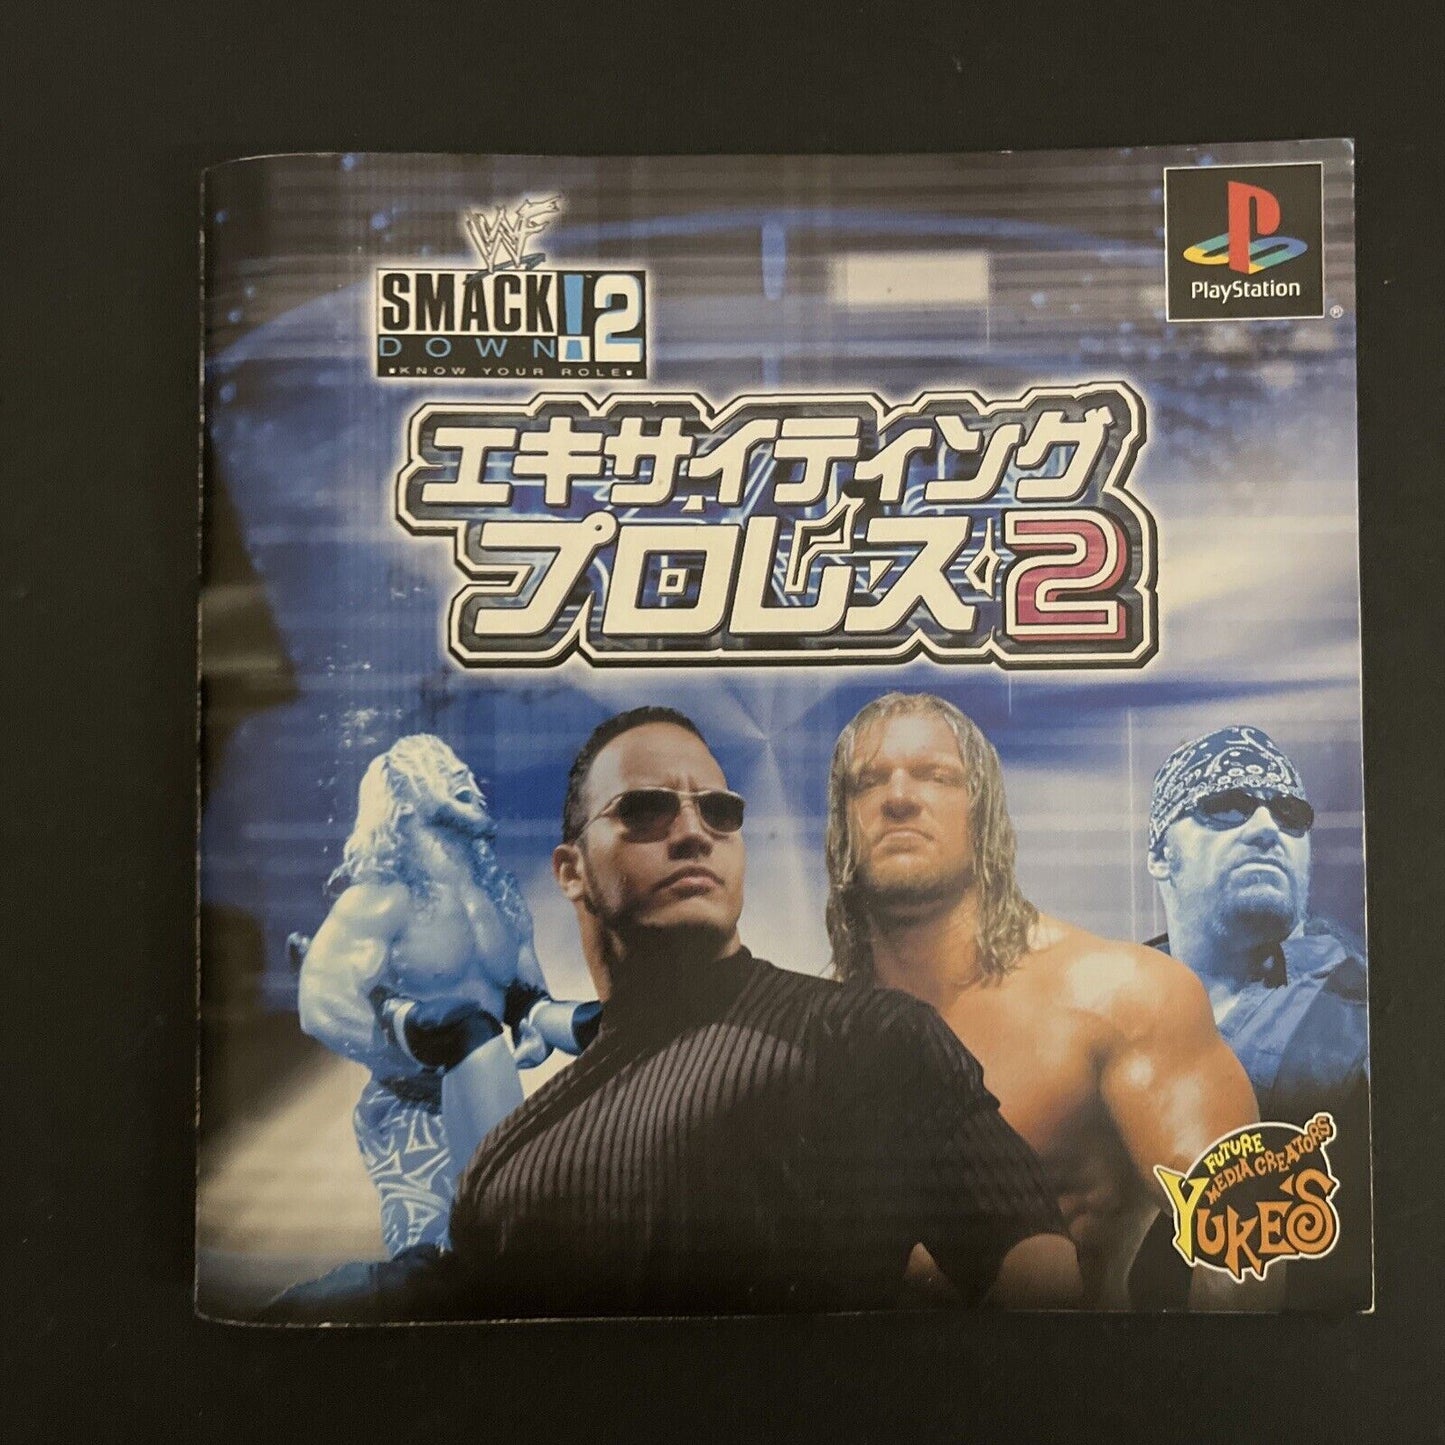 WWF Smackdown! 2 - Sony PlayStation PS1 NTSC-J JAPAN 2001 Pro Wrestling Game